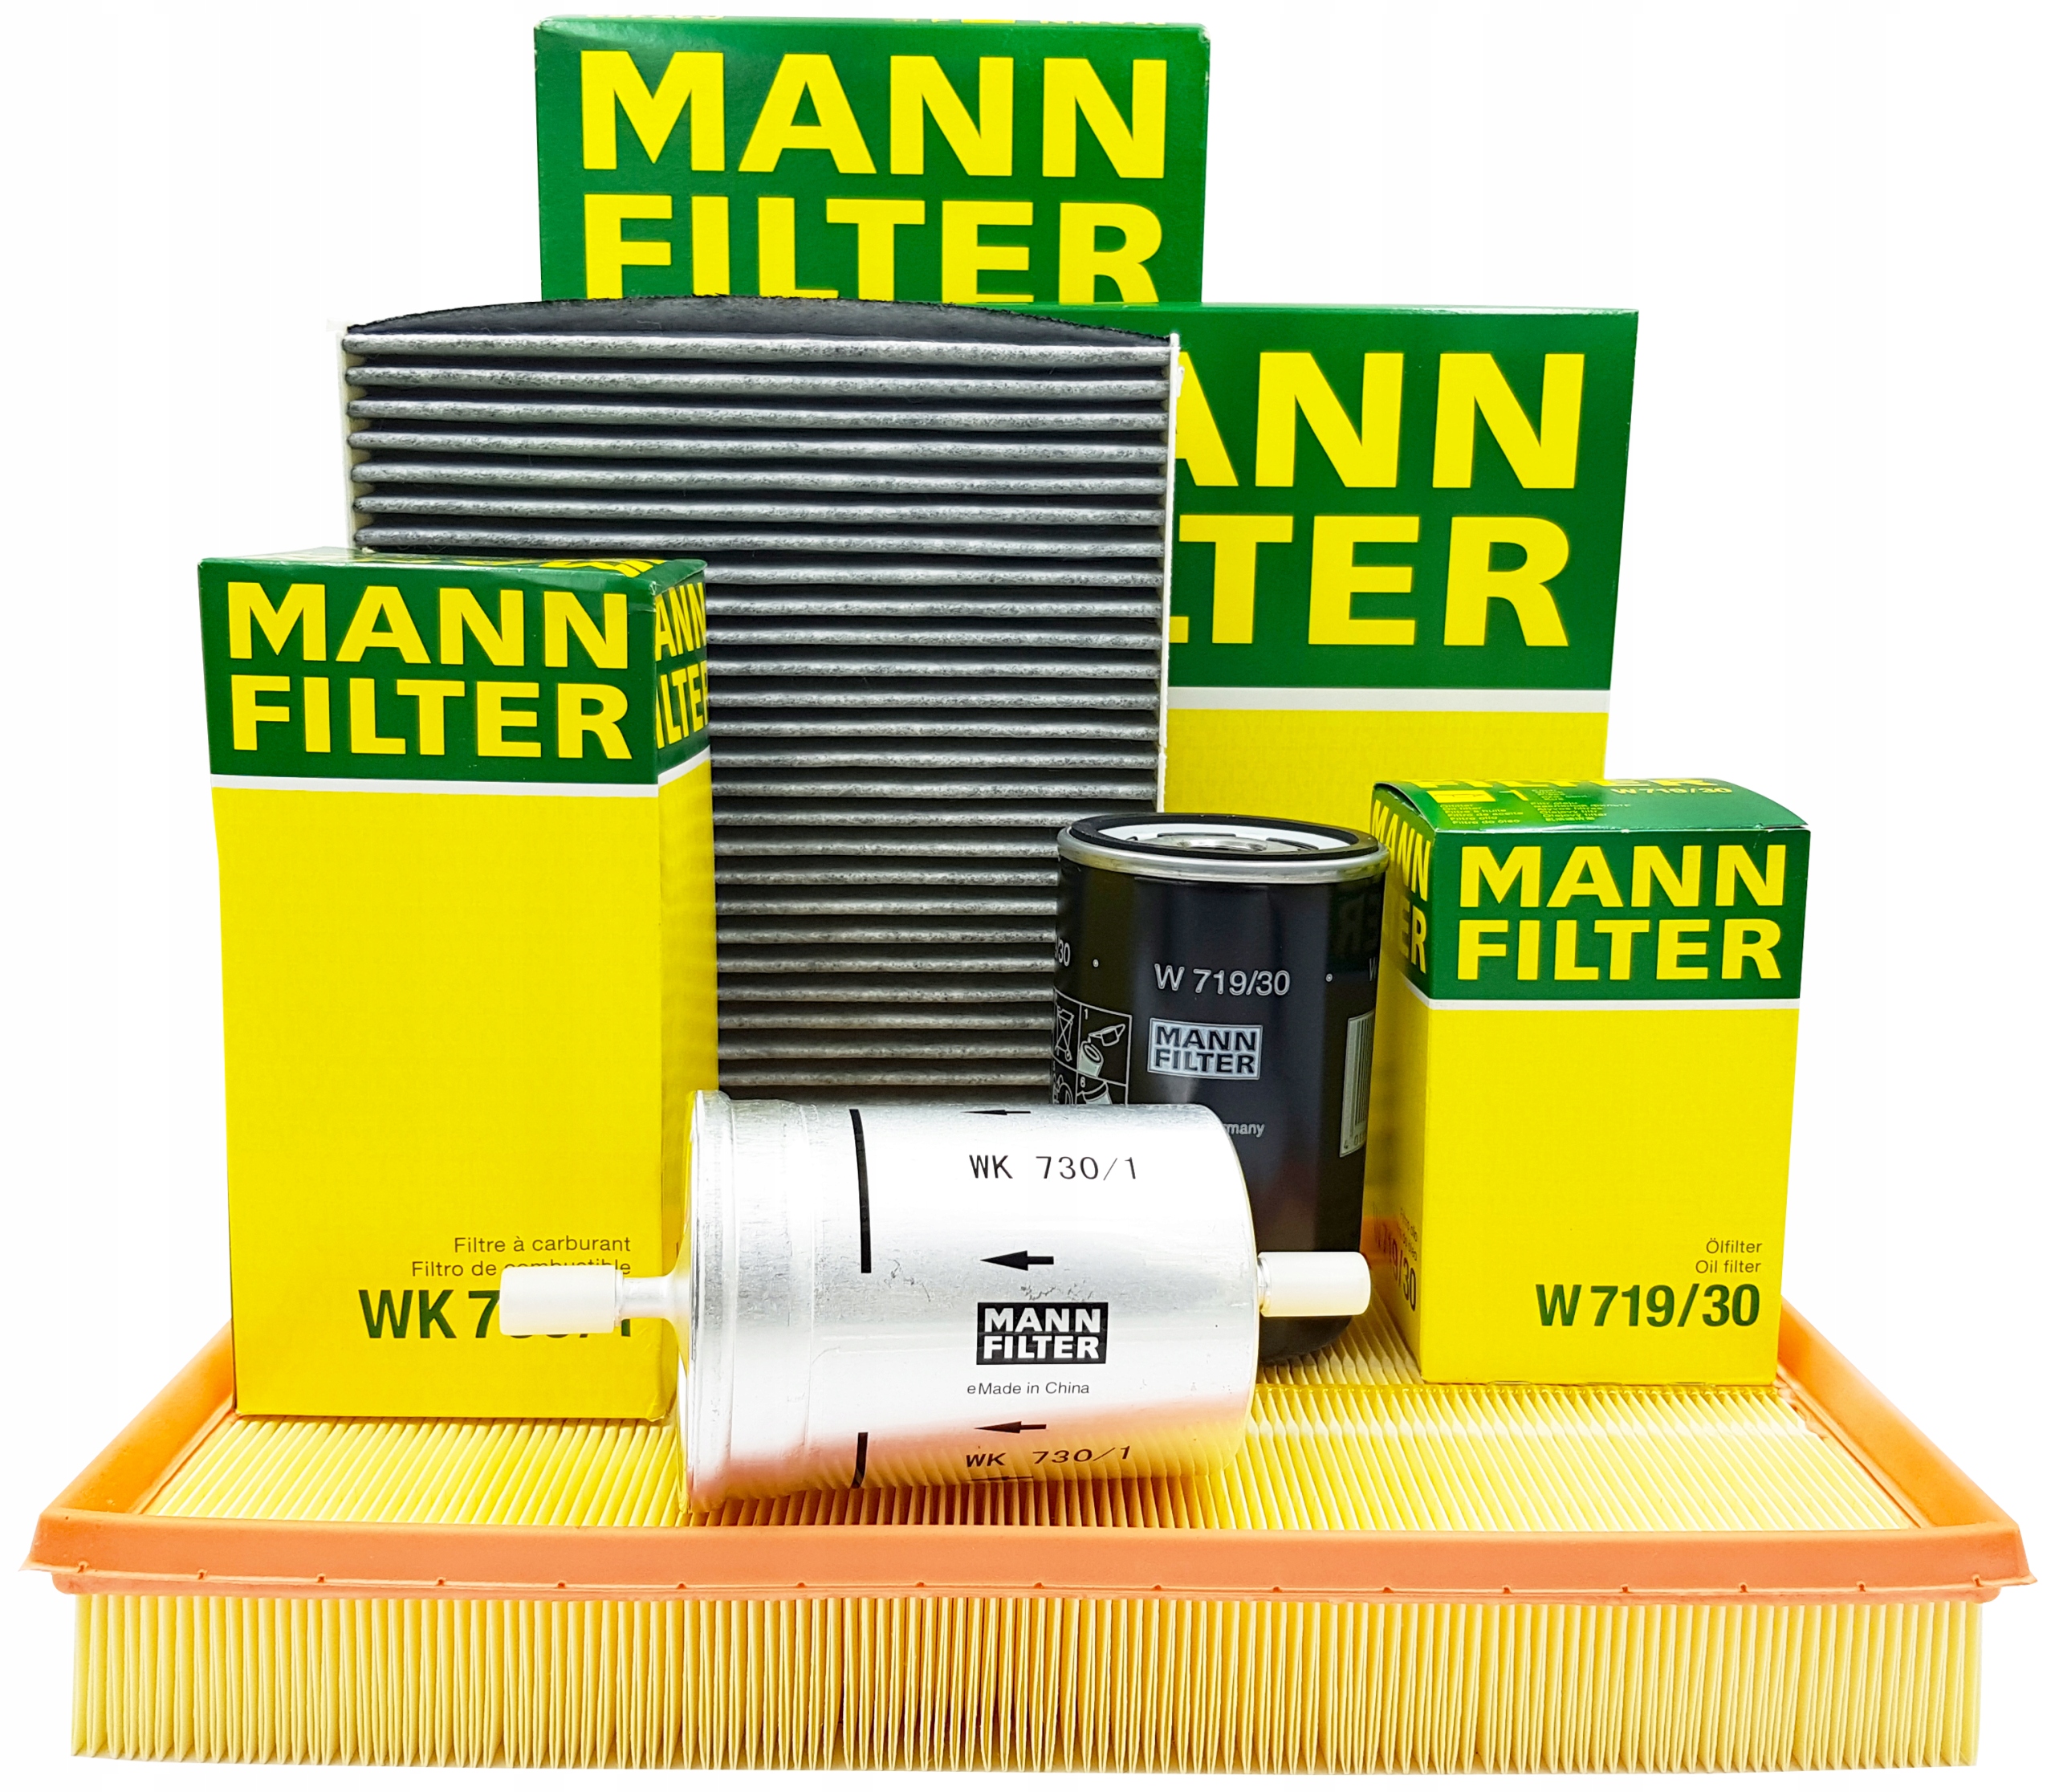 Zestaw filtrów mann do audi A3 8L1 1.6 1.8 1.8T. 